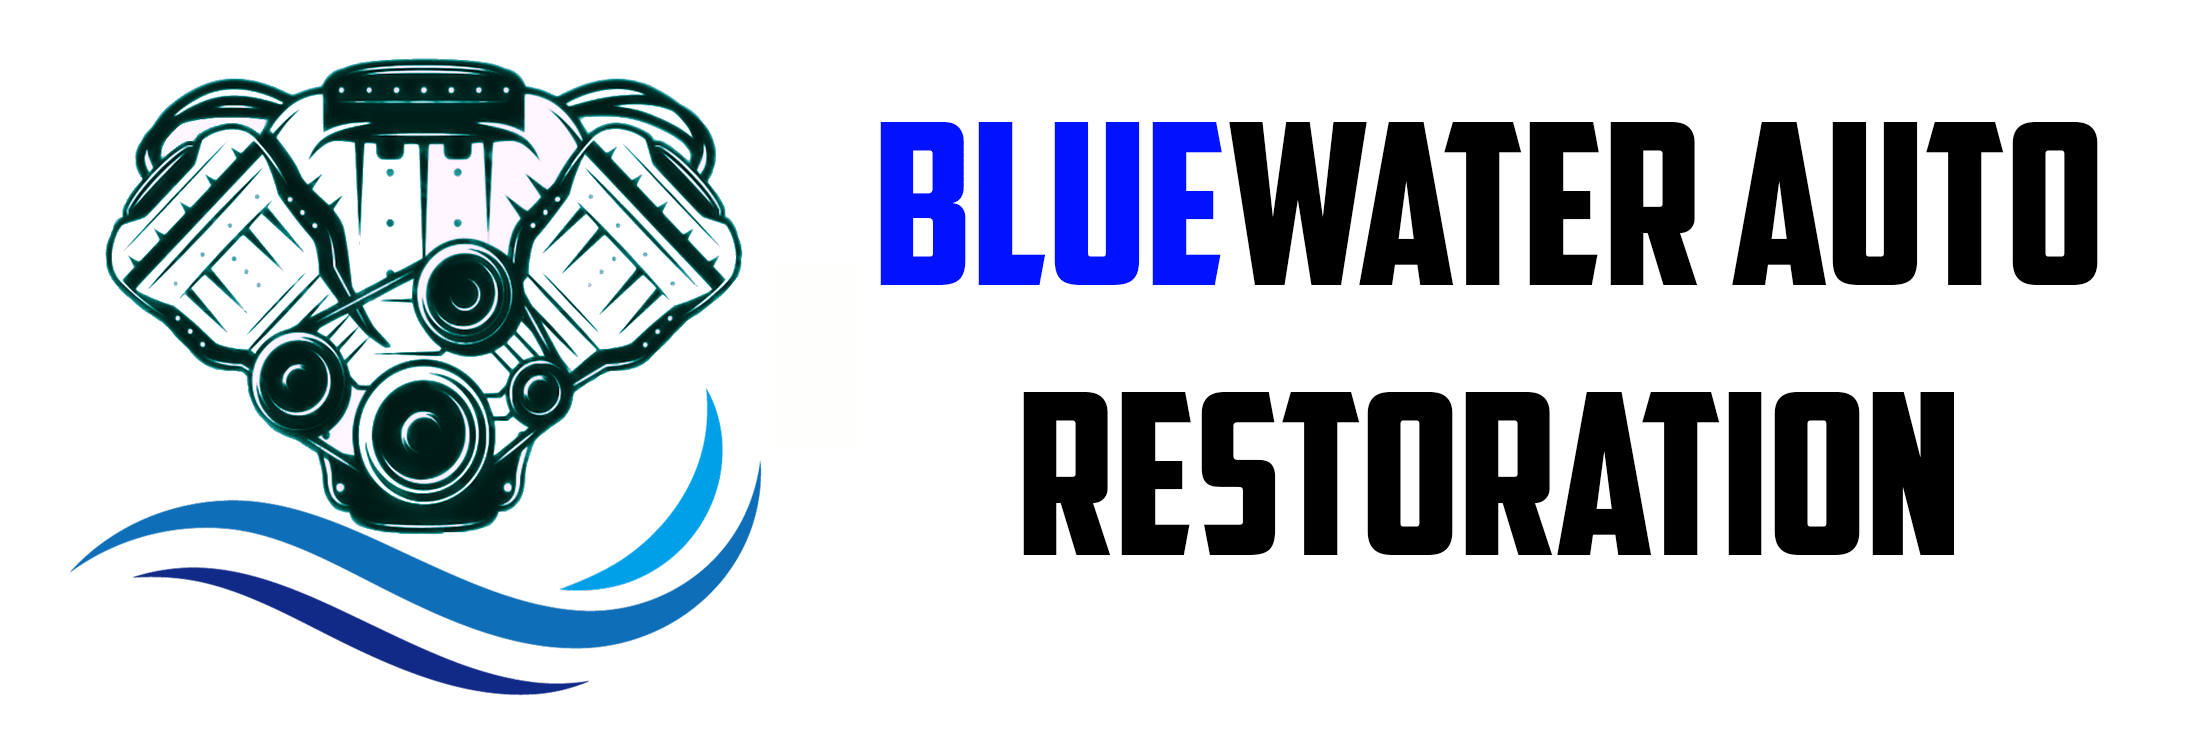 Bluewater Auto Restoration